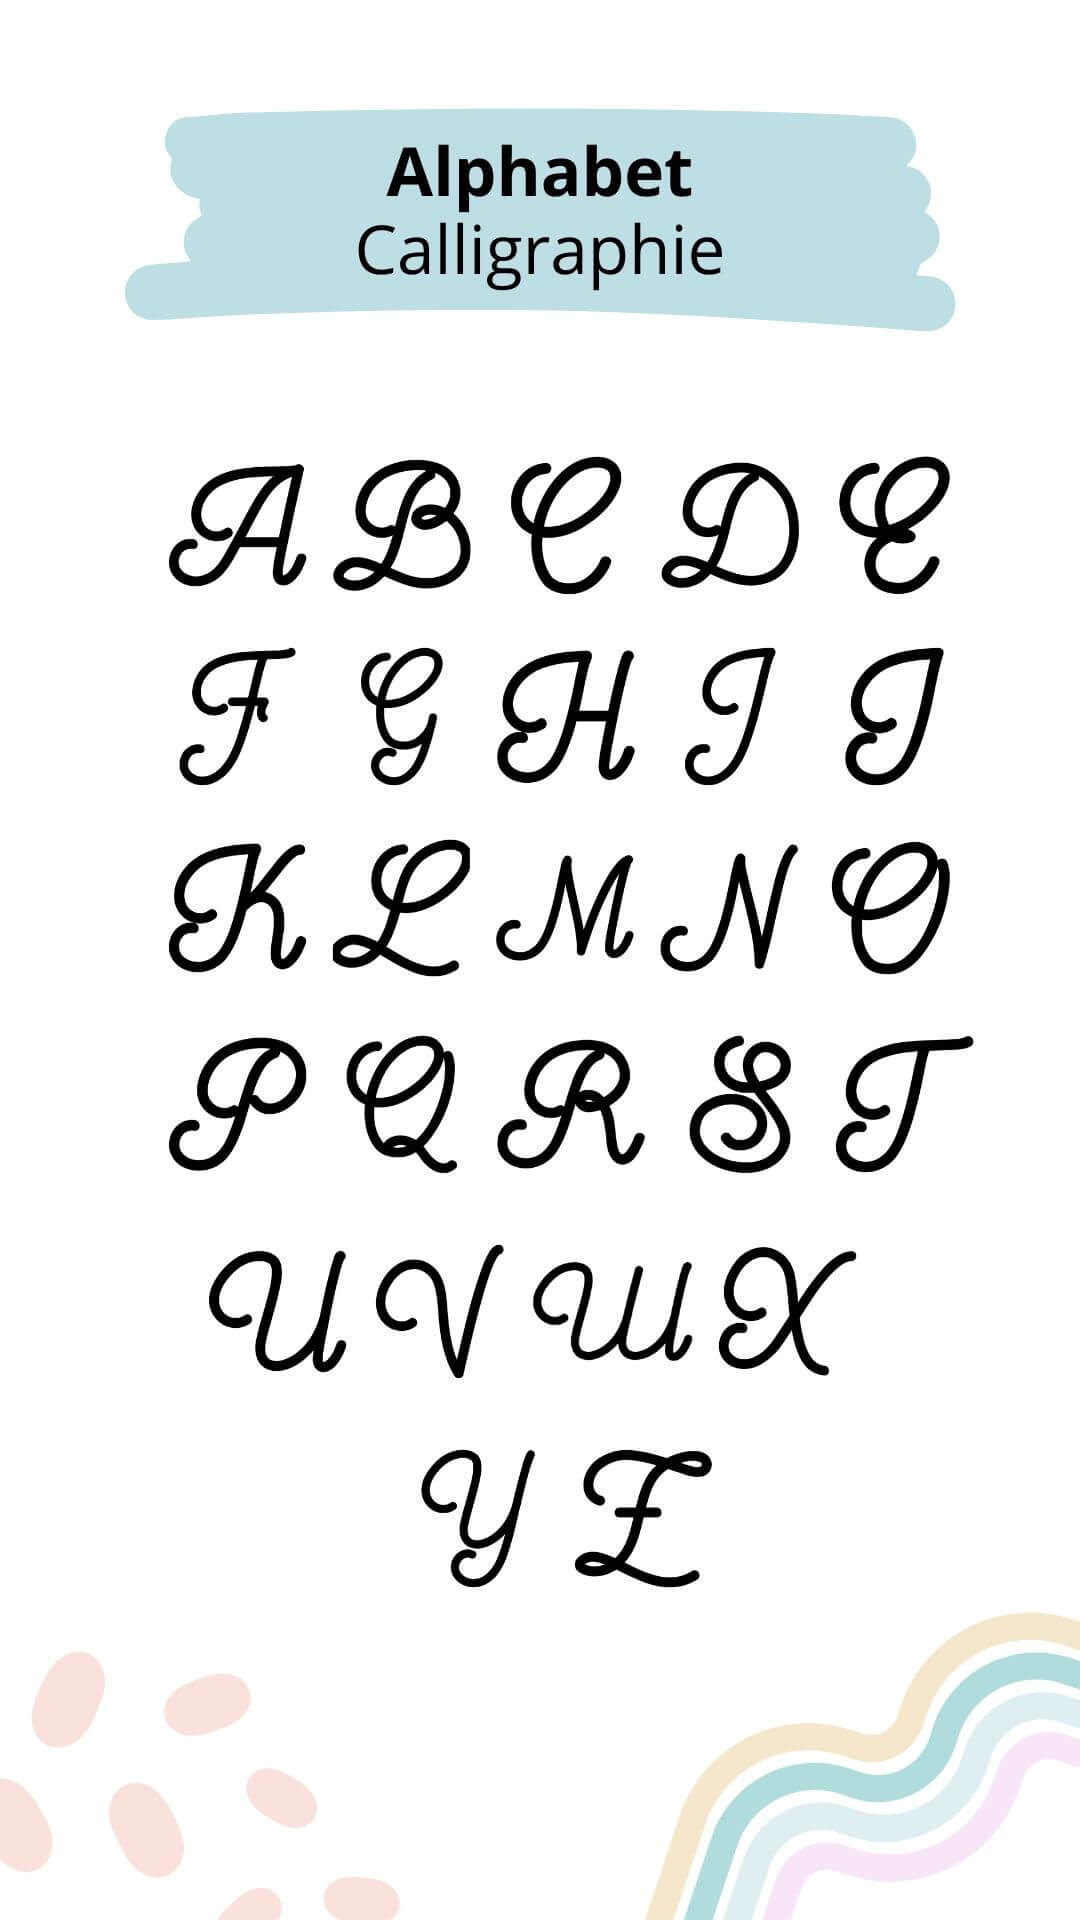 bijoux avec alphabet calligraphie